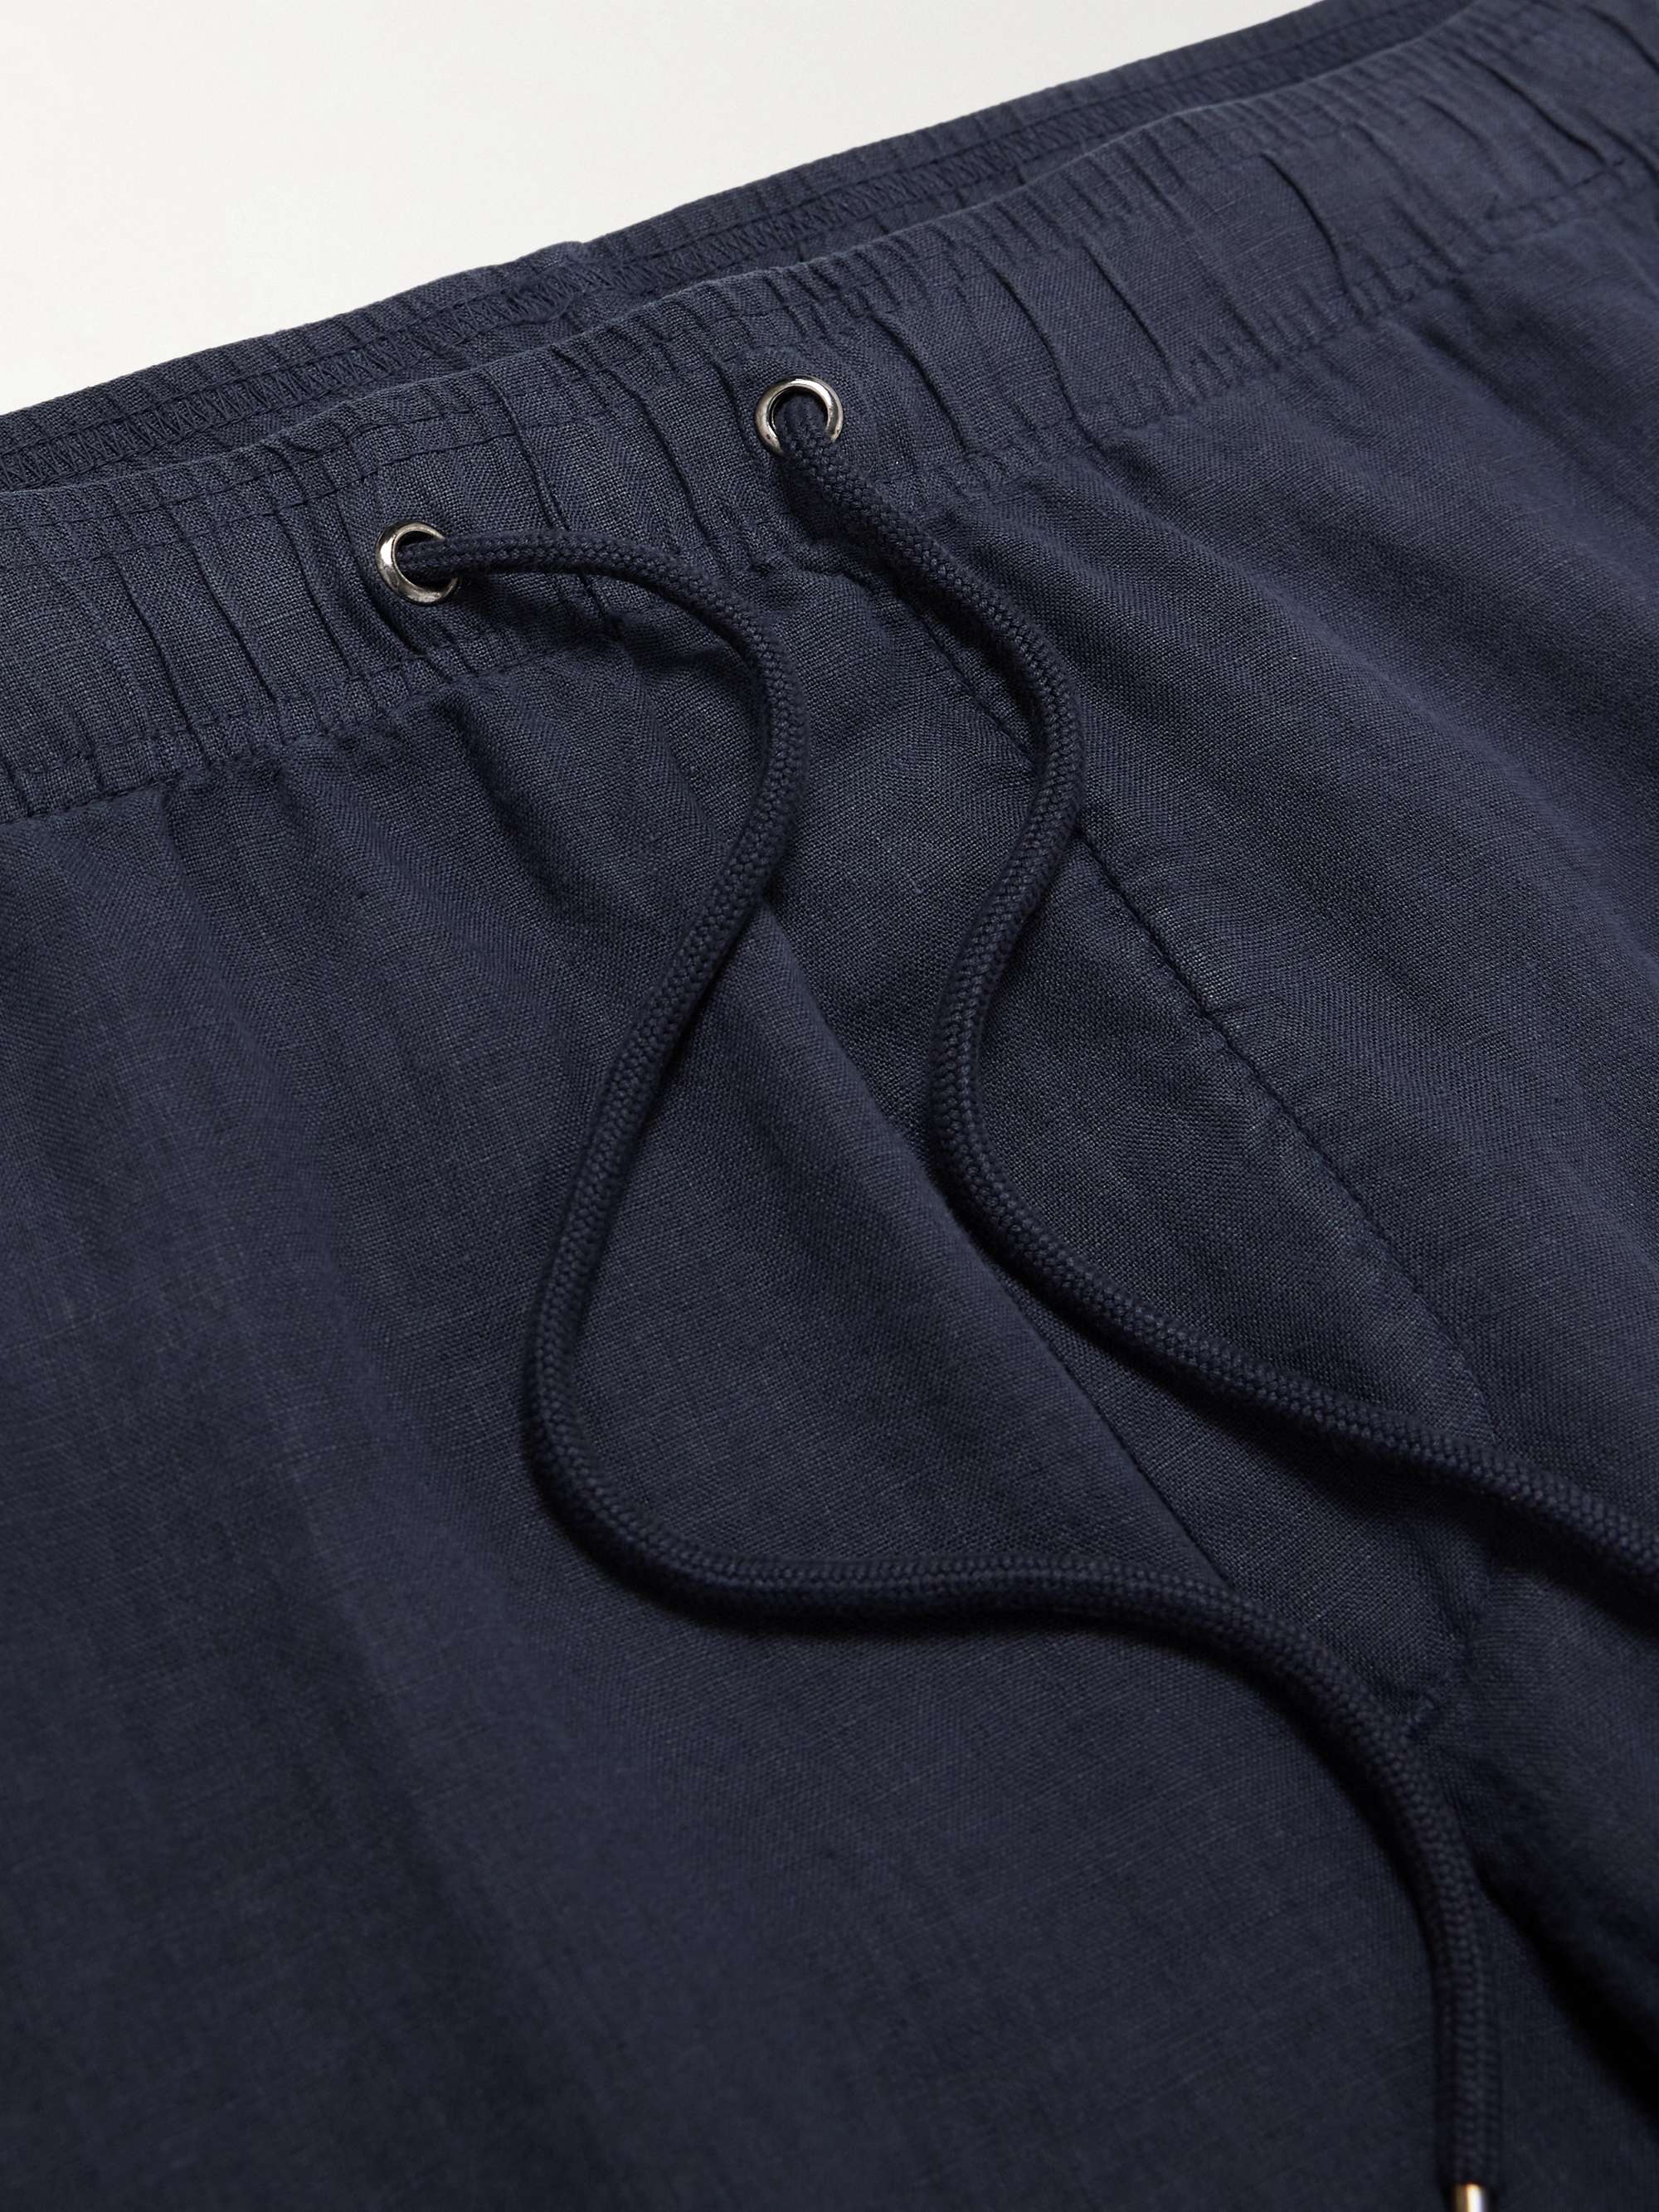 JAMES PERSE Straight-Leg Garment-Dyed Linen Drawstring Trousers for Men ...